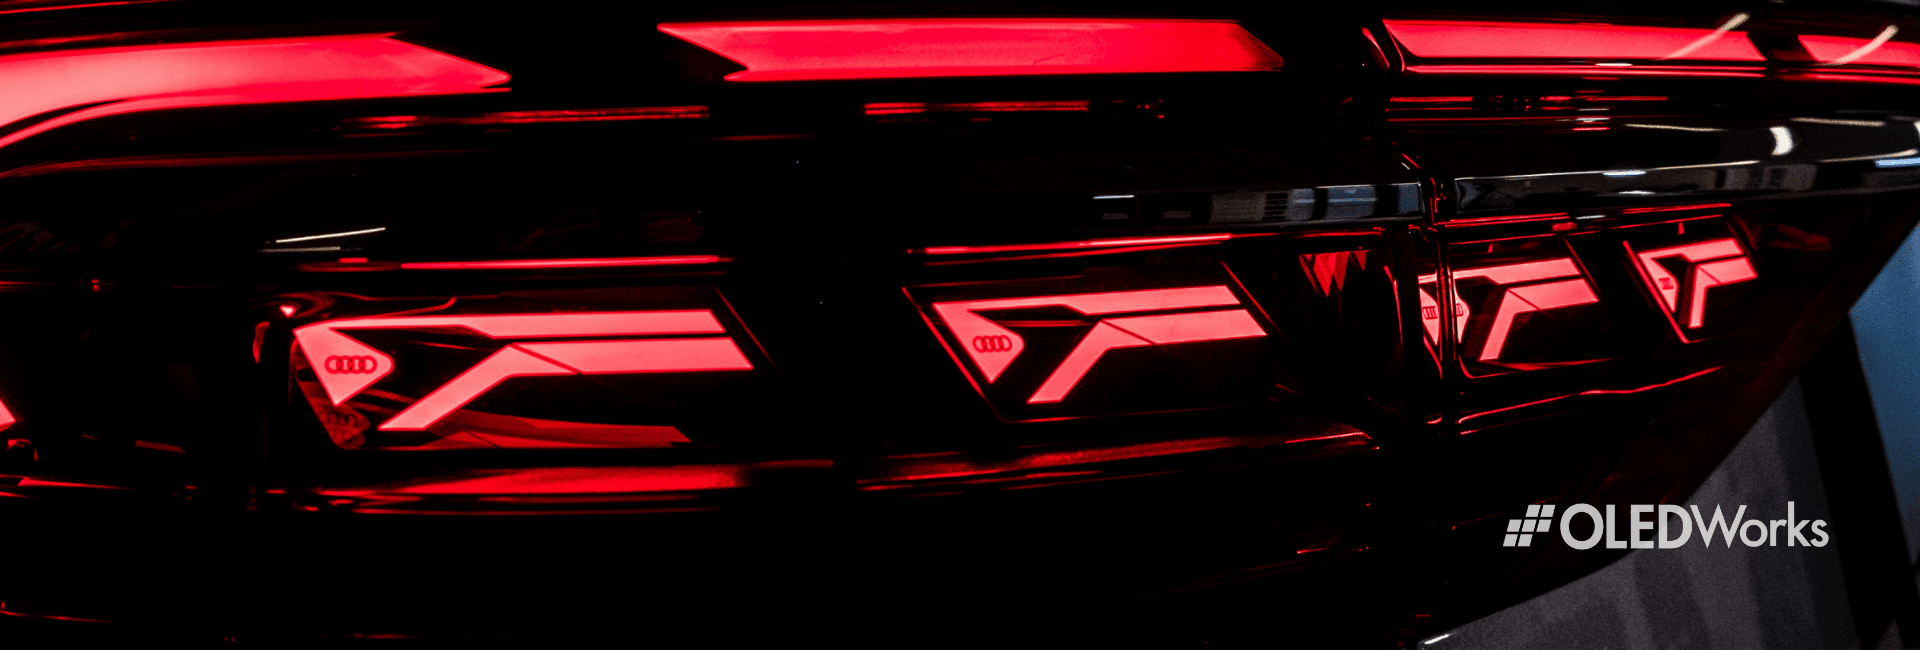 OLED Lighting Panels in Audi A8 | OLEDWorks